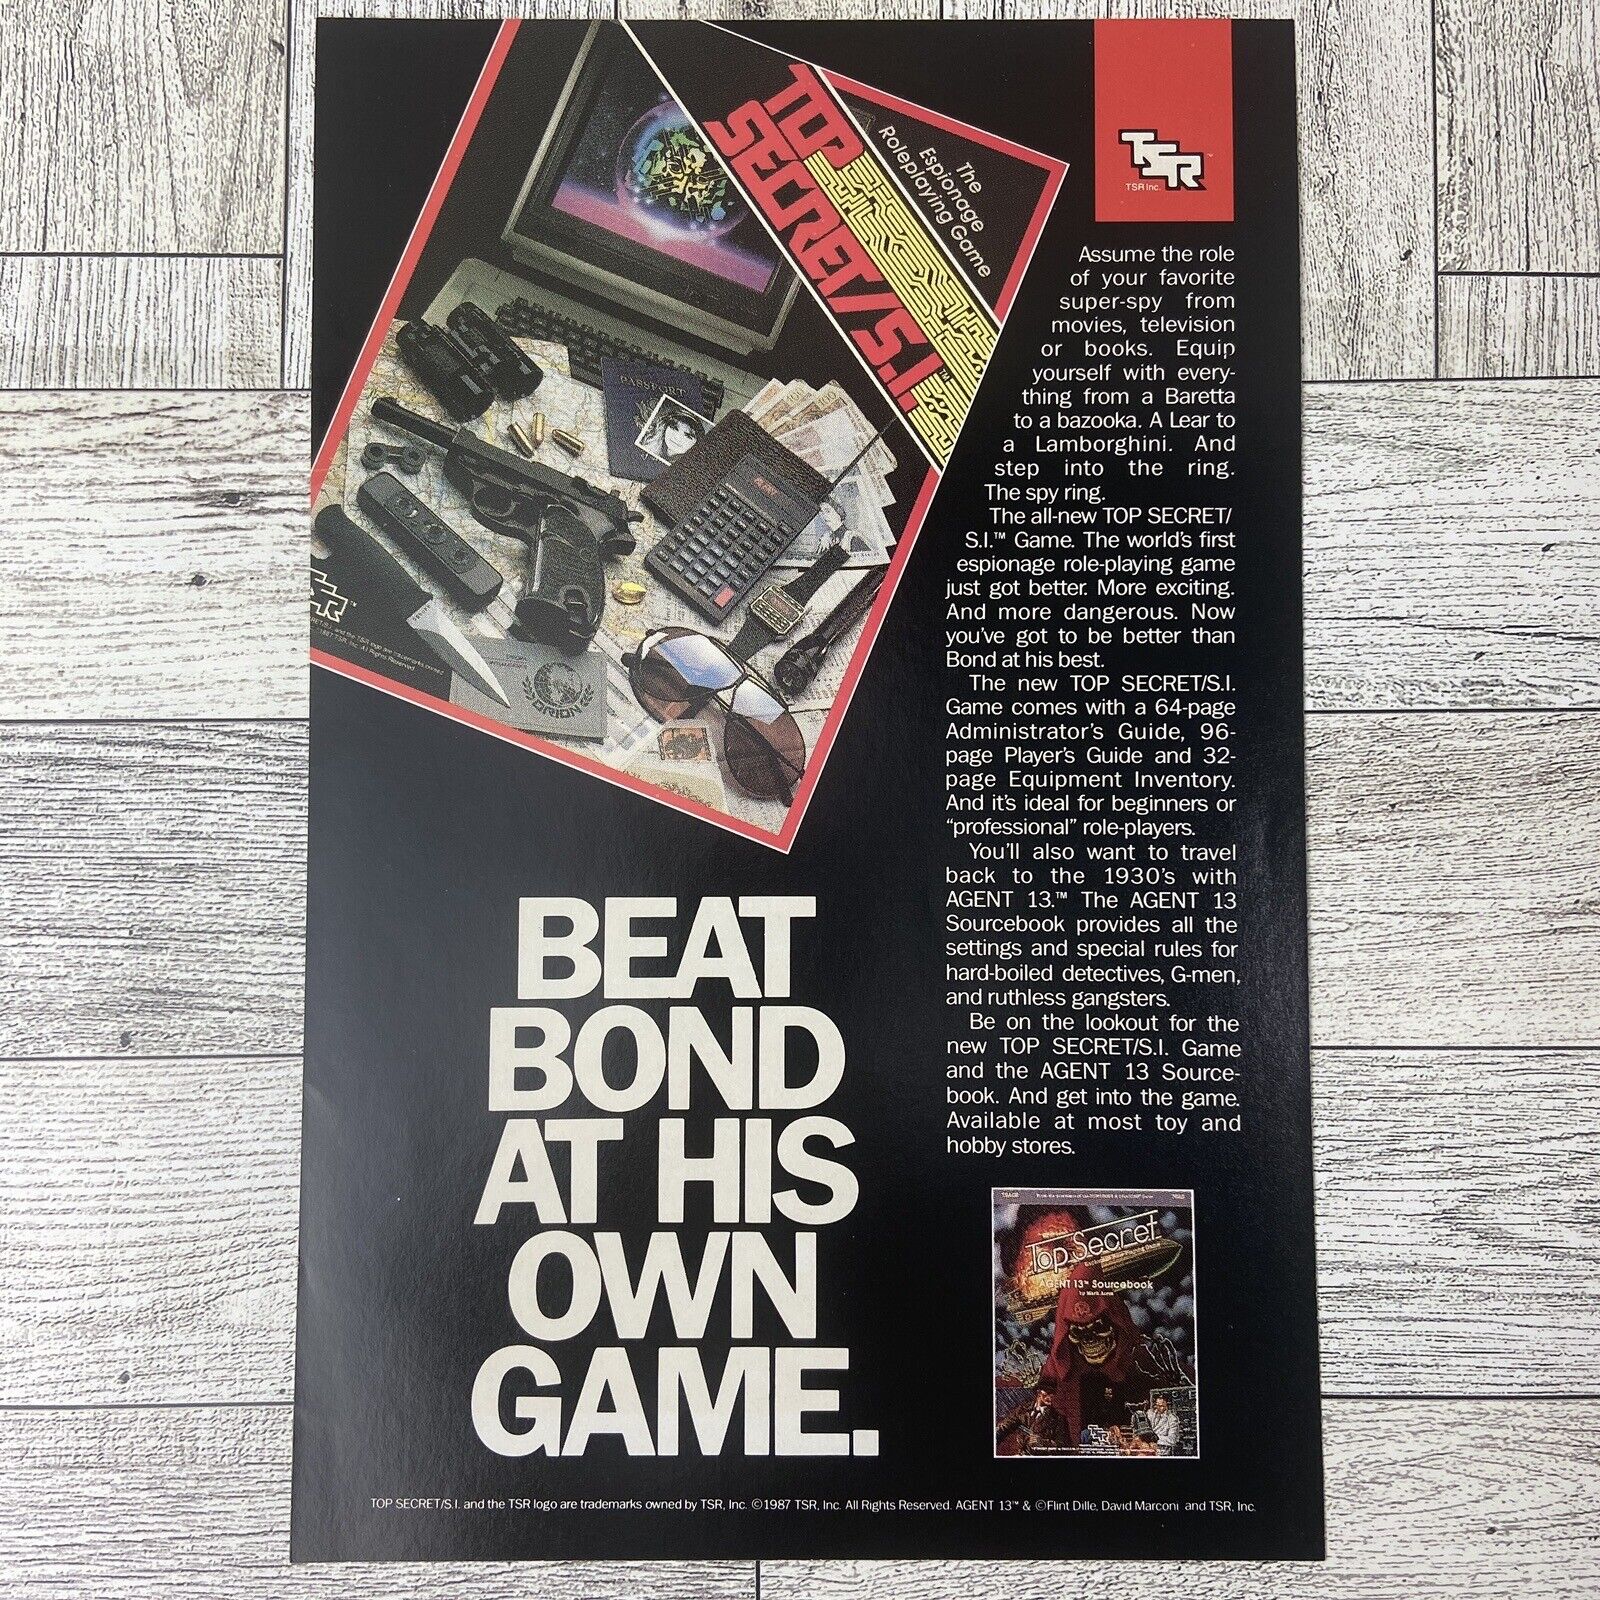 Print Ad Top Secret S I Role Game Poster Promo Art Vintage 1987 TSR Original